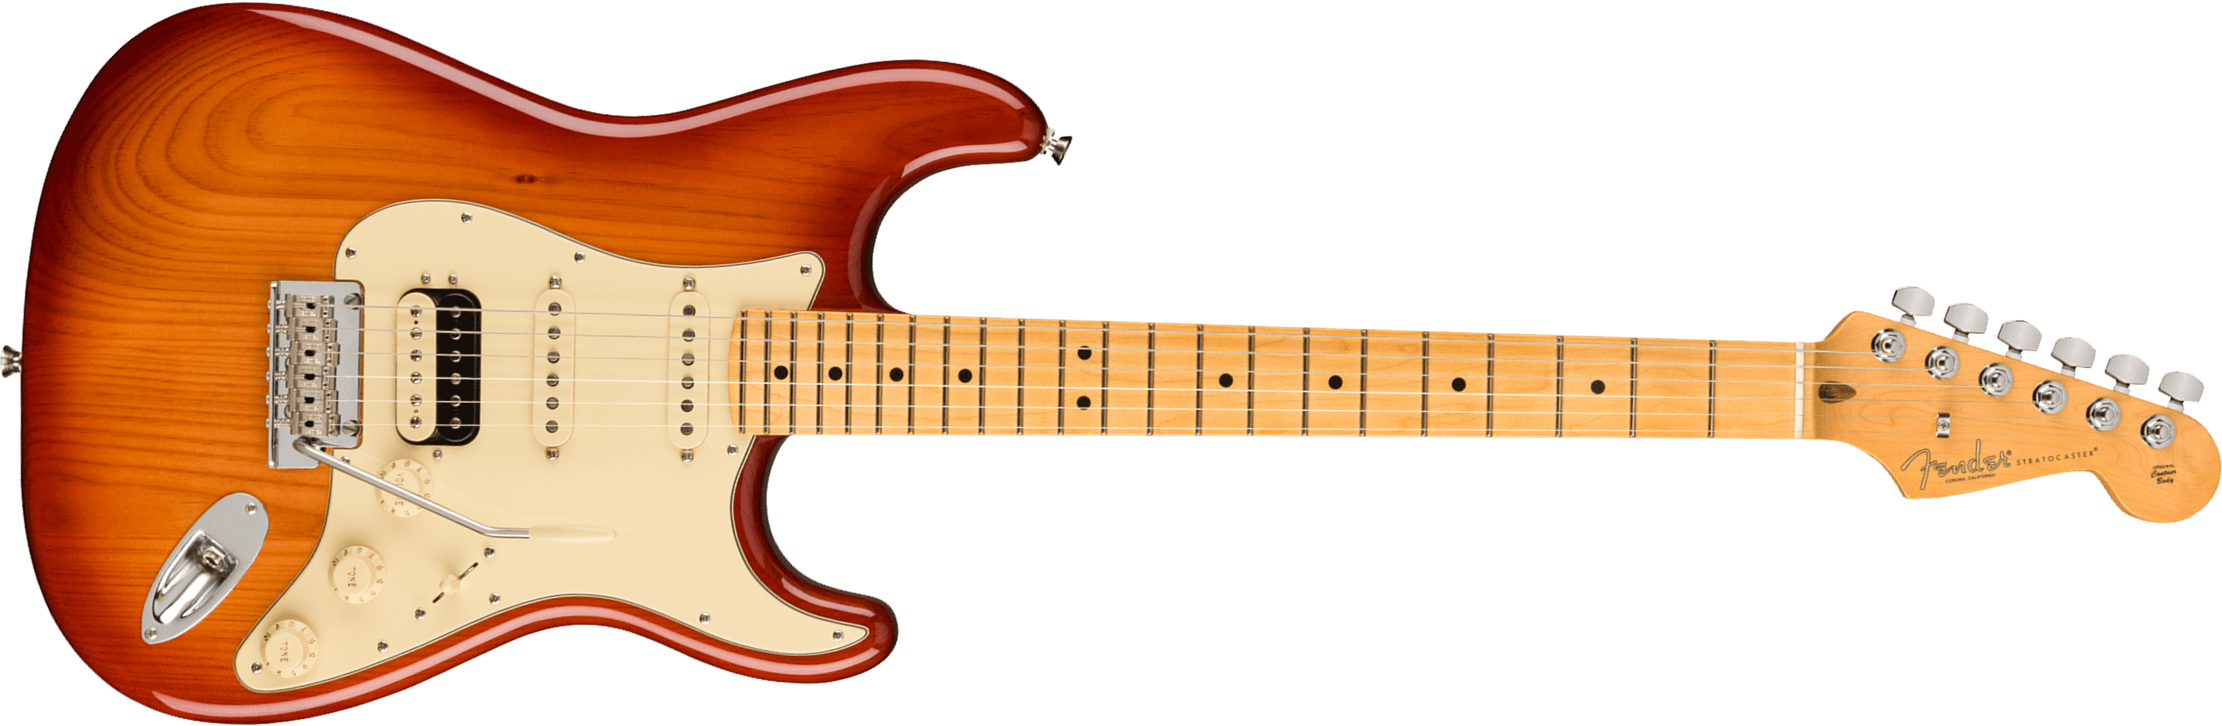 Fender Strat American Professional Ii Hss Usa Mn - Sienna Sunburst - Str shape electric guitar - Main picture